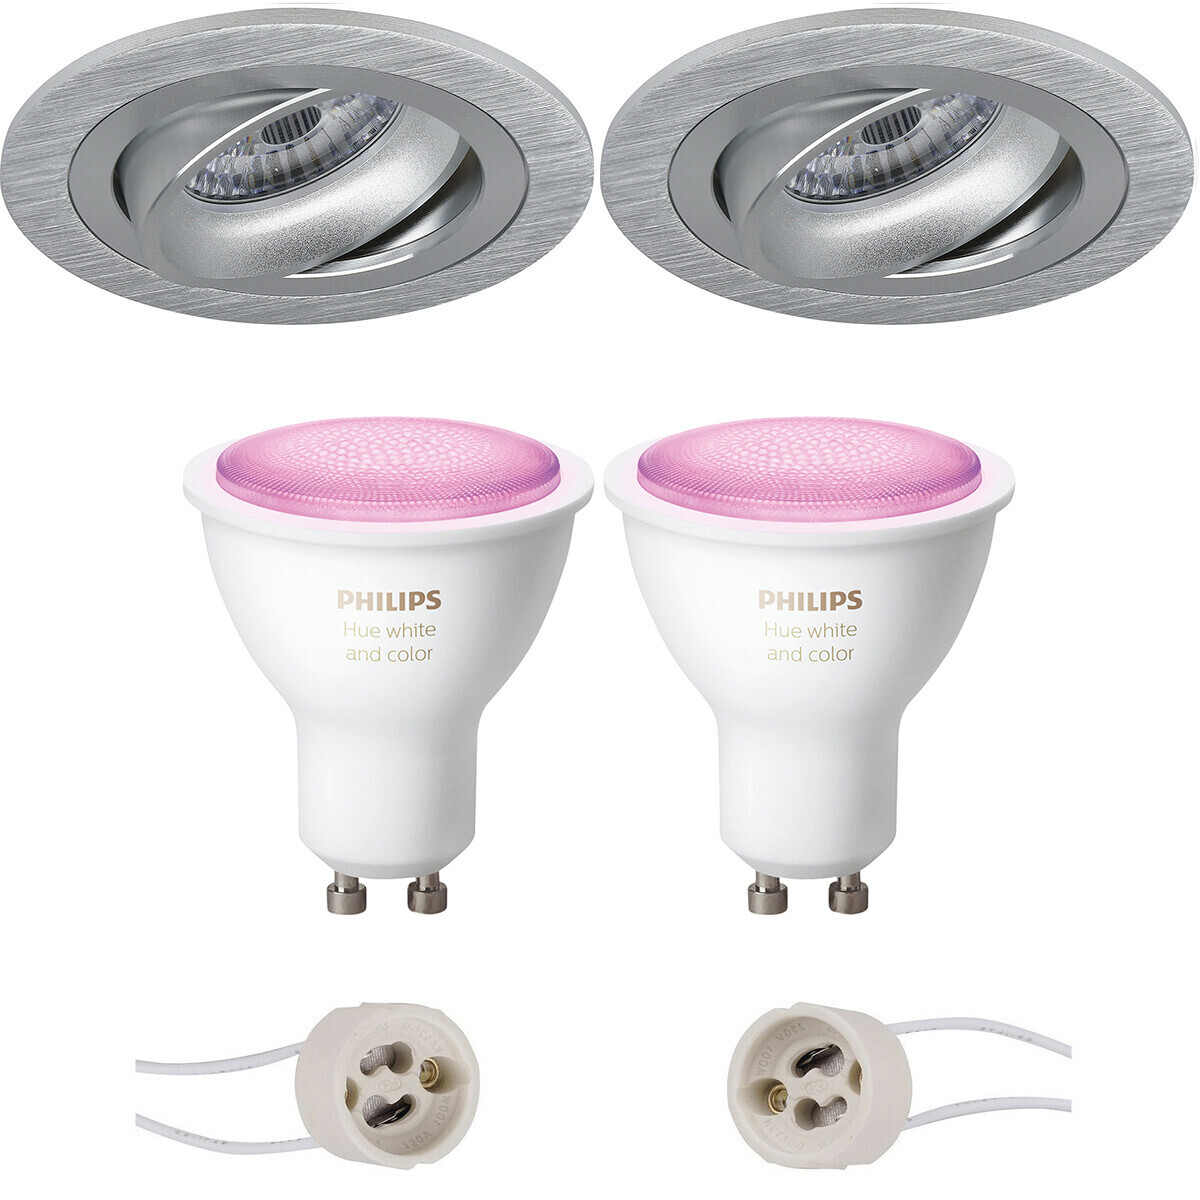 BES LED Pragmi Alpin Pro - Inbouw Rond - Mat Zilver - Kantelbaar Ø92mm - Philips Hue - LED Spot Set GU10 - White and Color Ambiance - Bluetooth